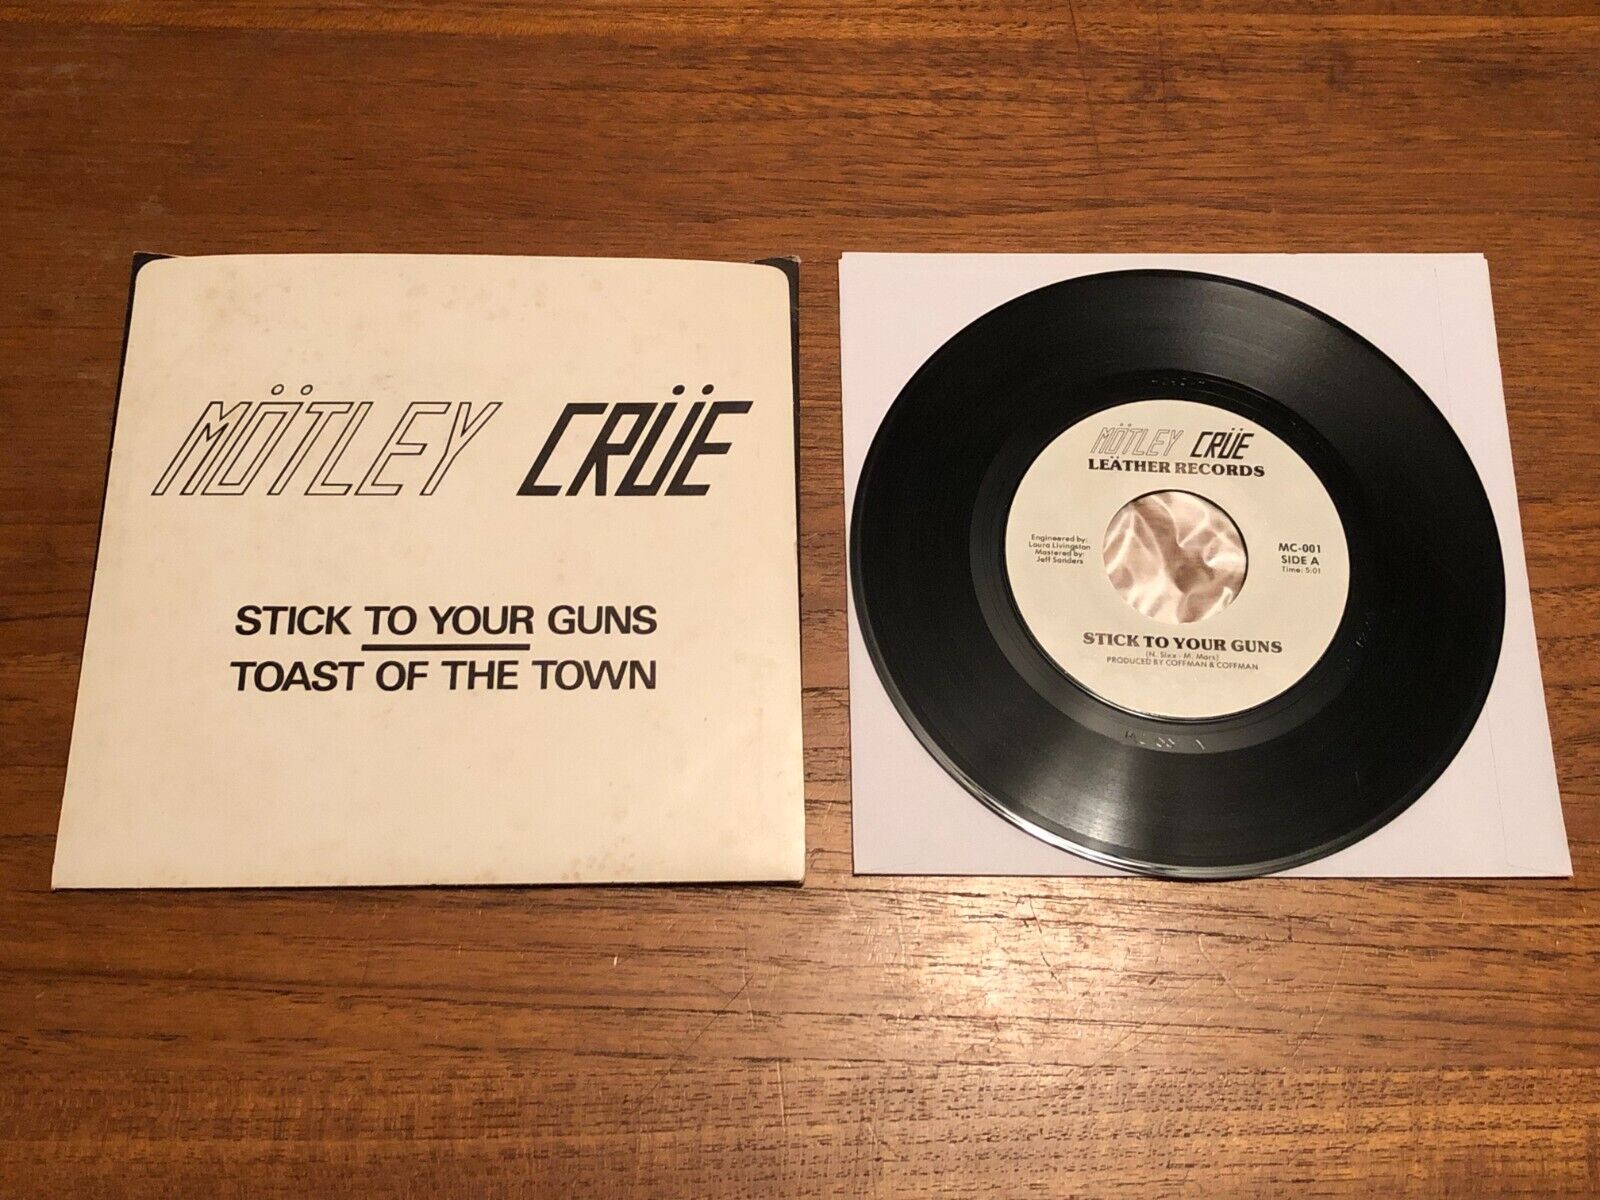 Motley Crue ORIGINAL 7" Stick To Your Guns Leathur Records 1981 ONLY 1,000 MADE